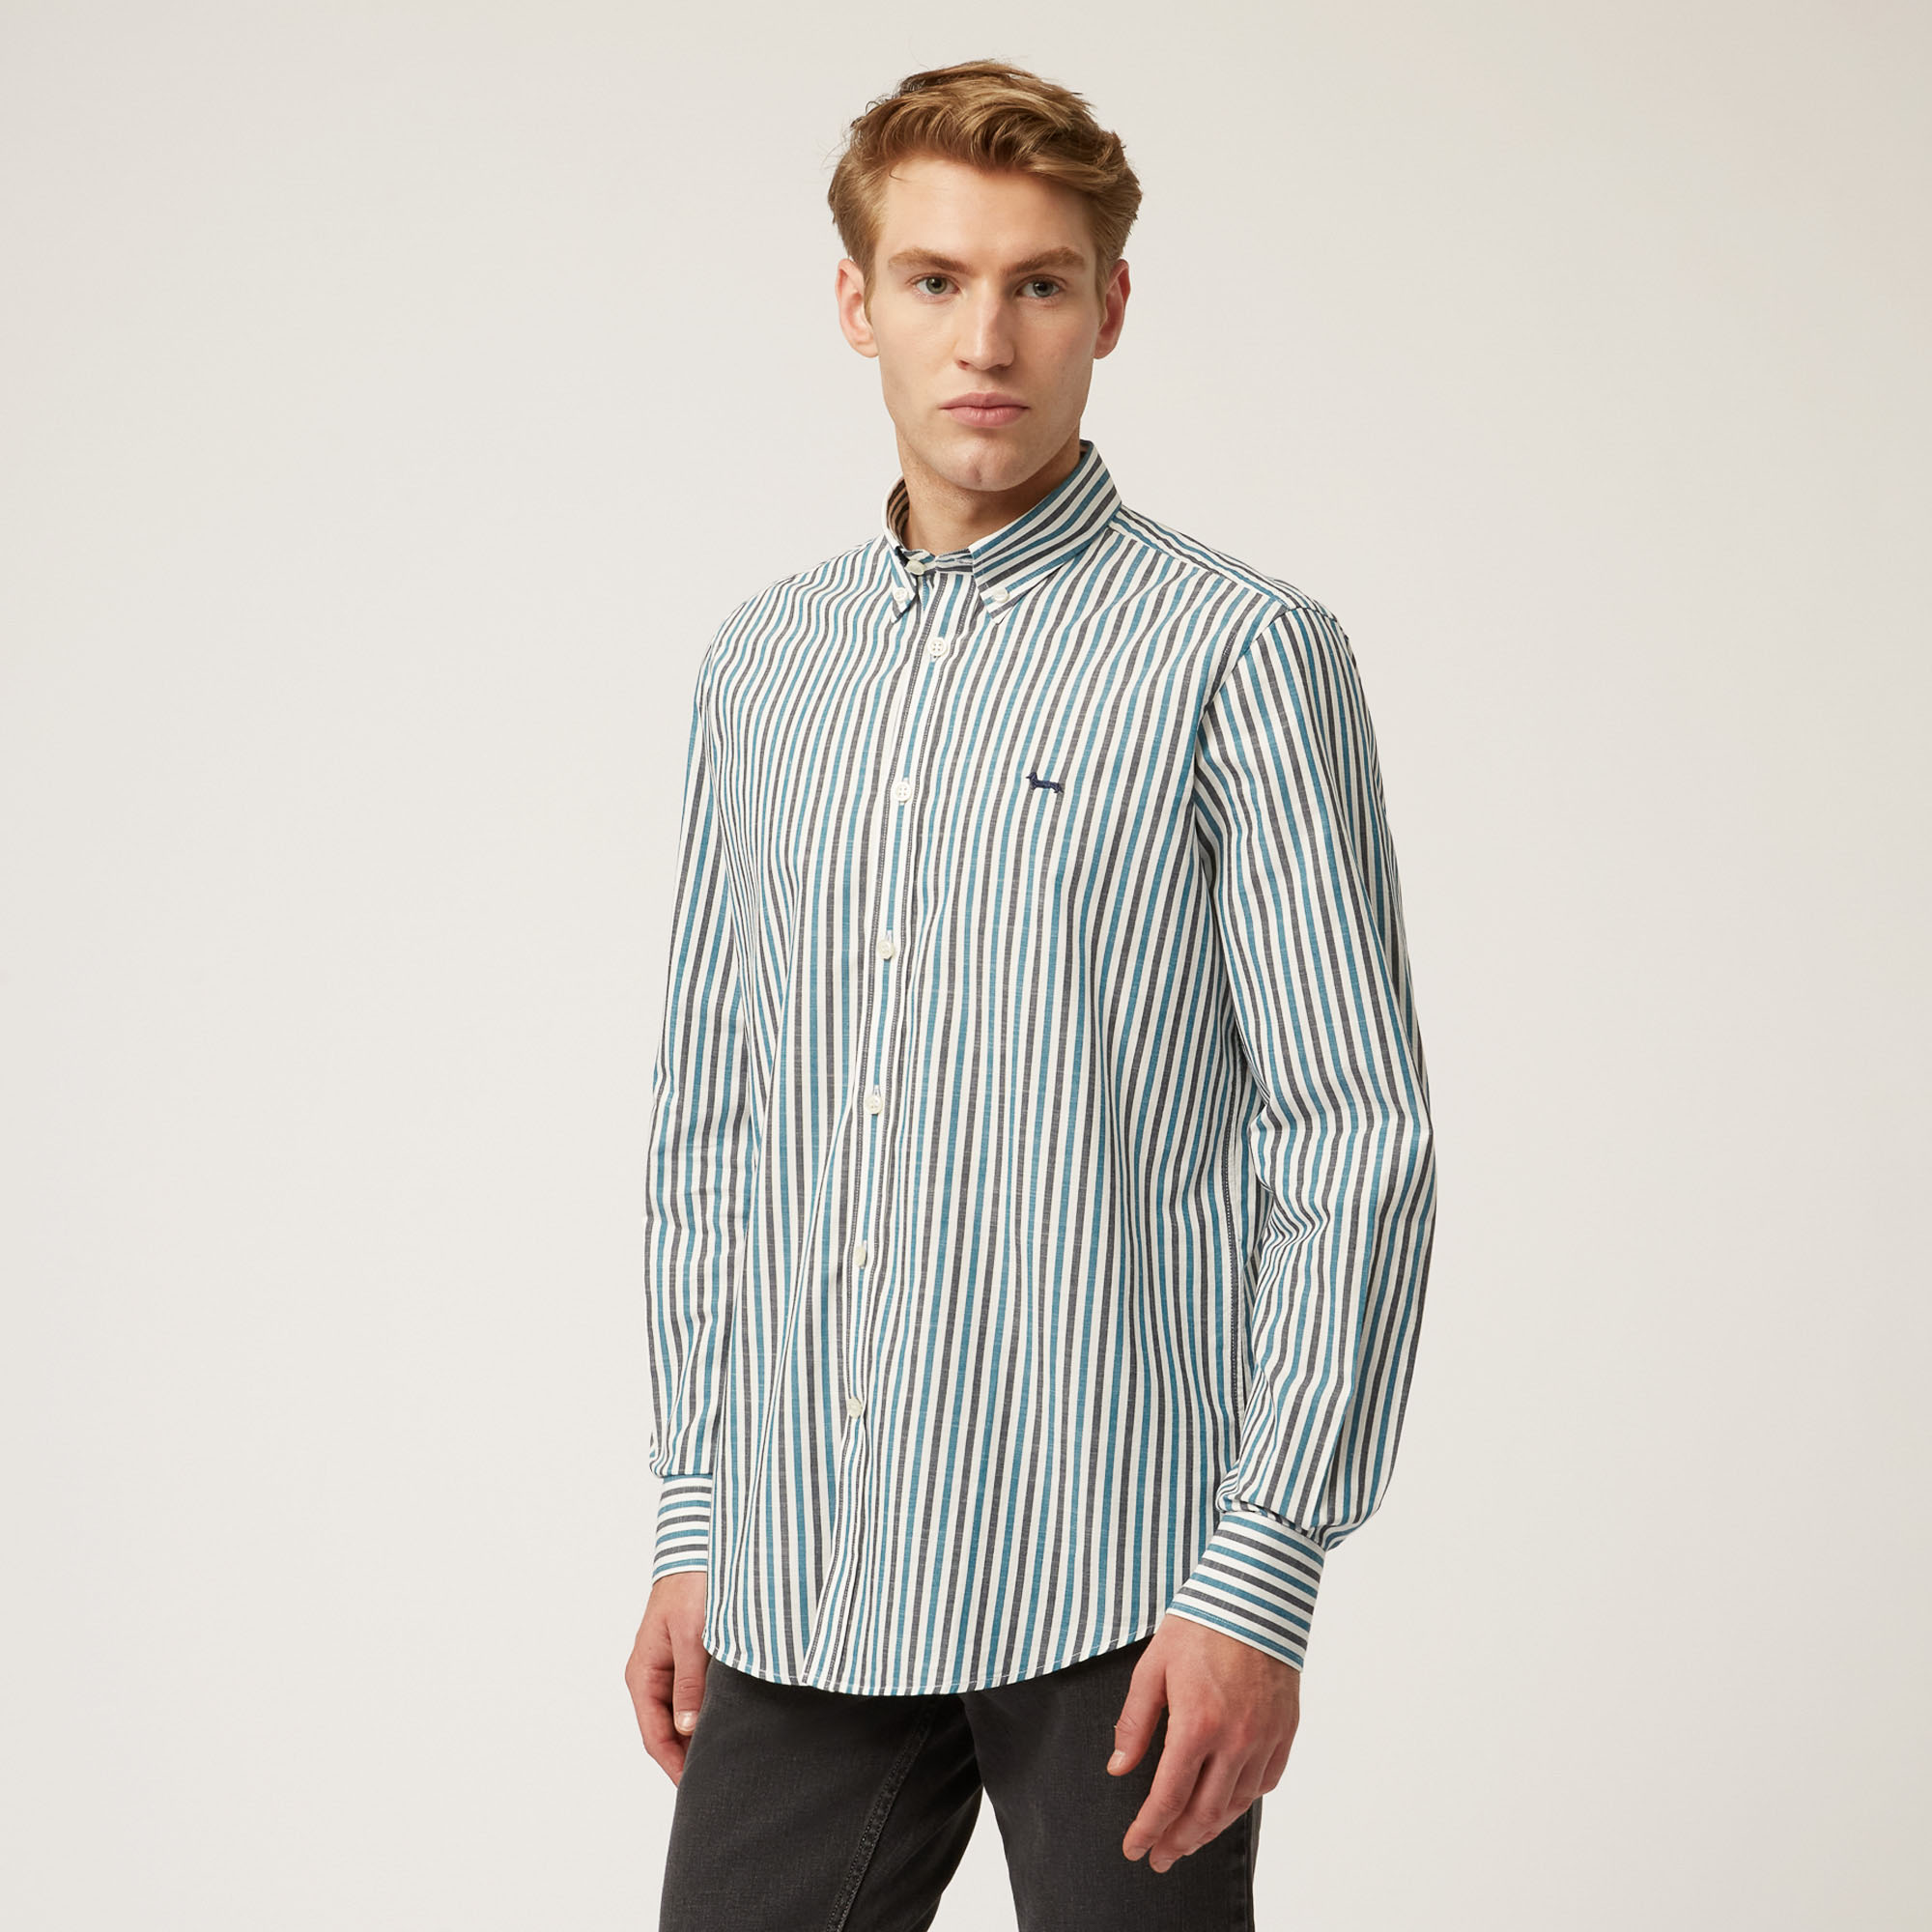 Elevate Dutility Striped Cotton Shirt, Blue, large